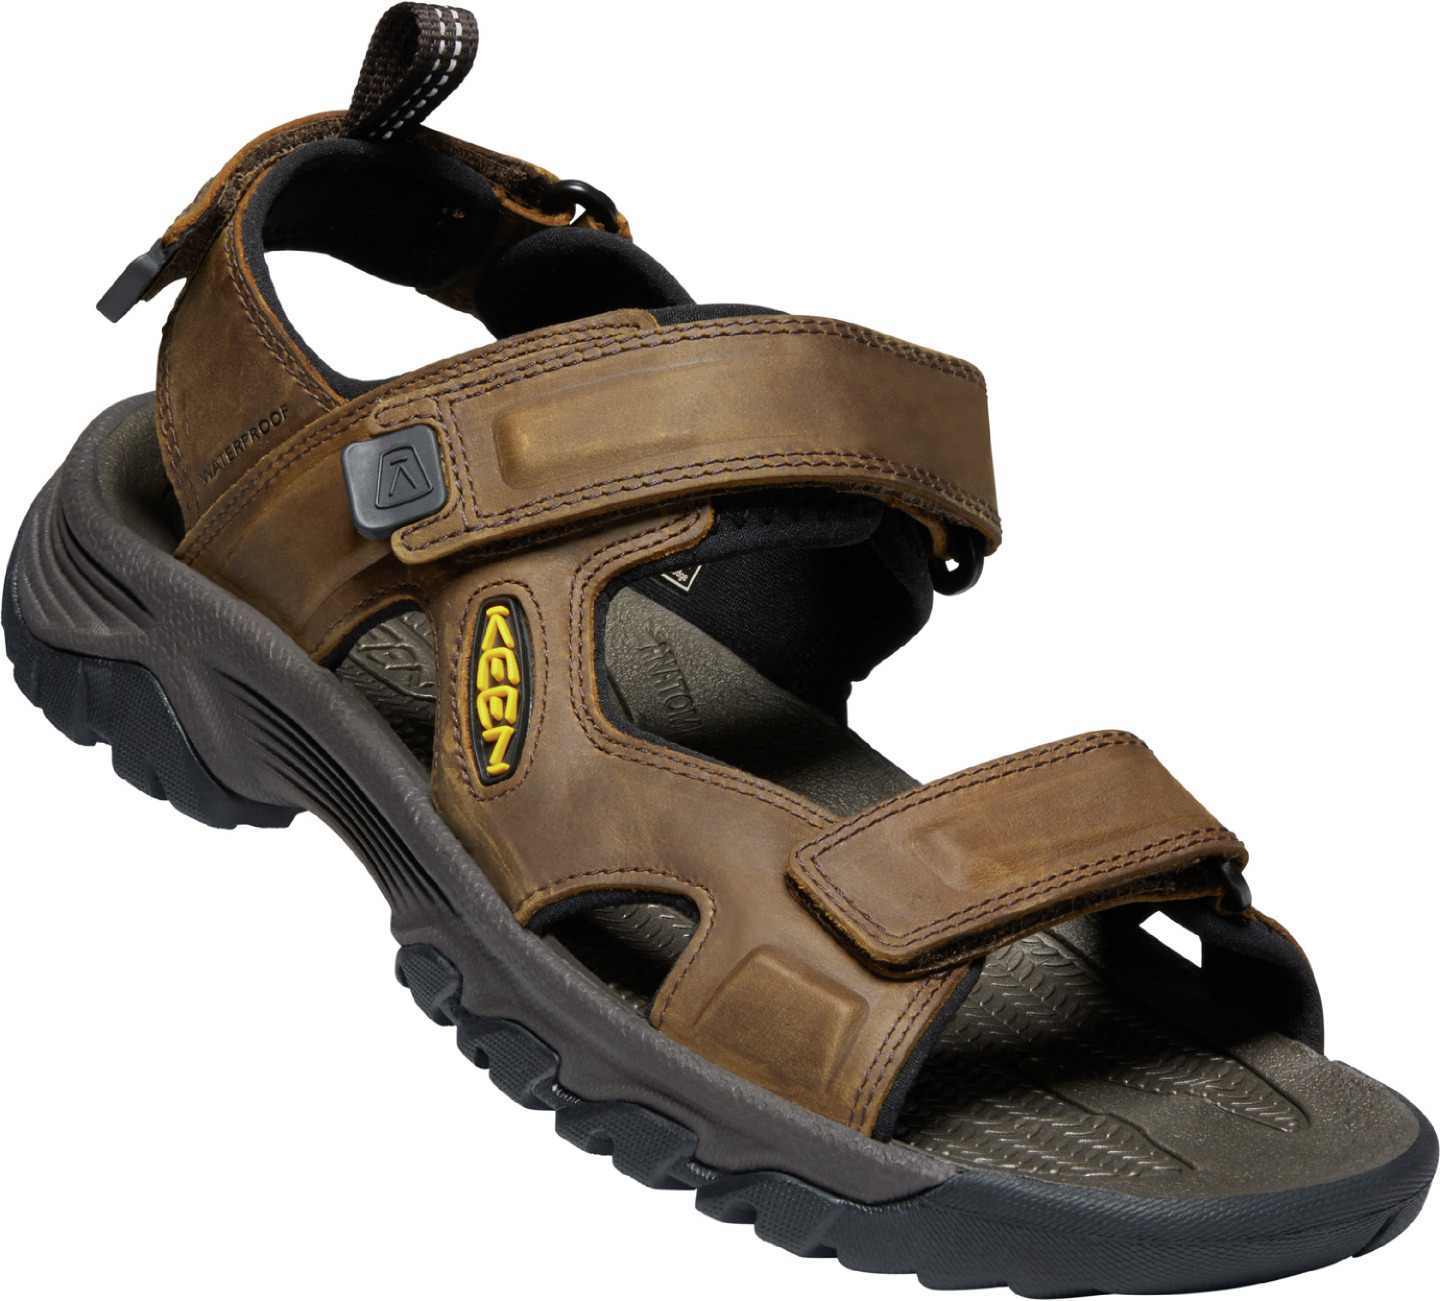 Keen pánské sandály Targhee III Open Toe Sandal Men - Bison/Mulch Barva: bison/mulch, Velikost: 9 UK (43 EU / 28 cm)